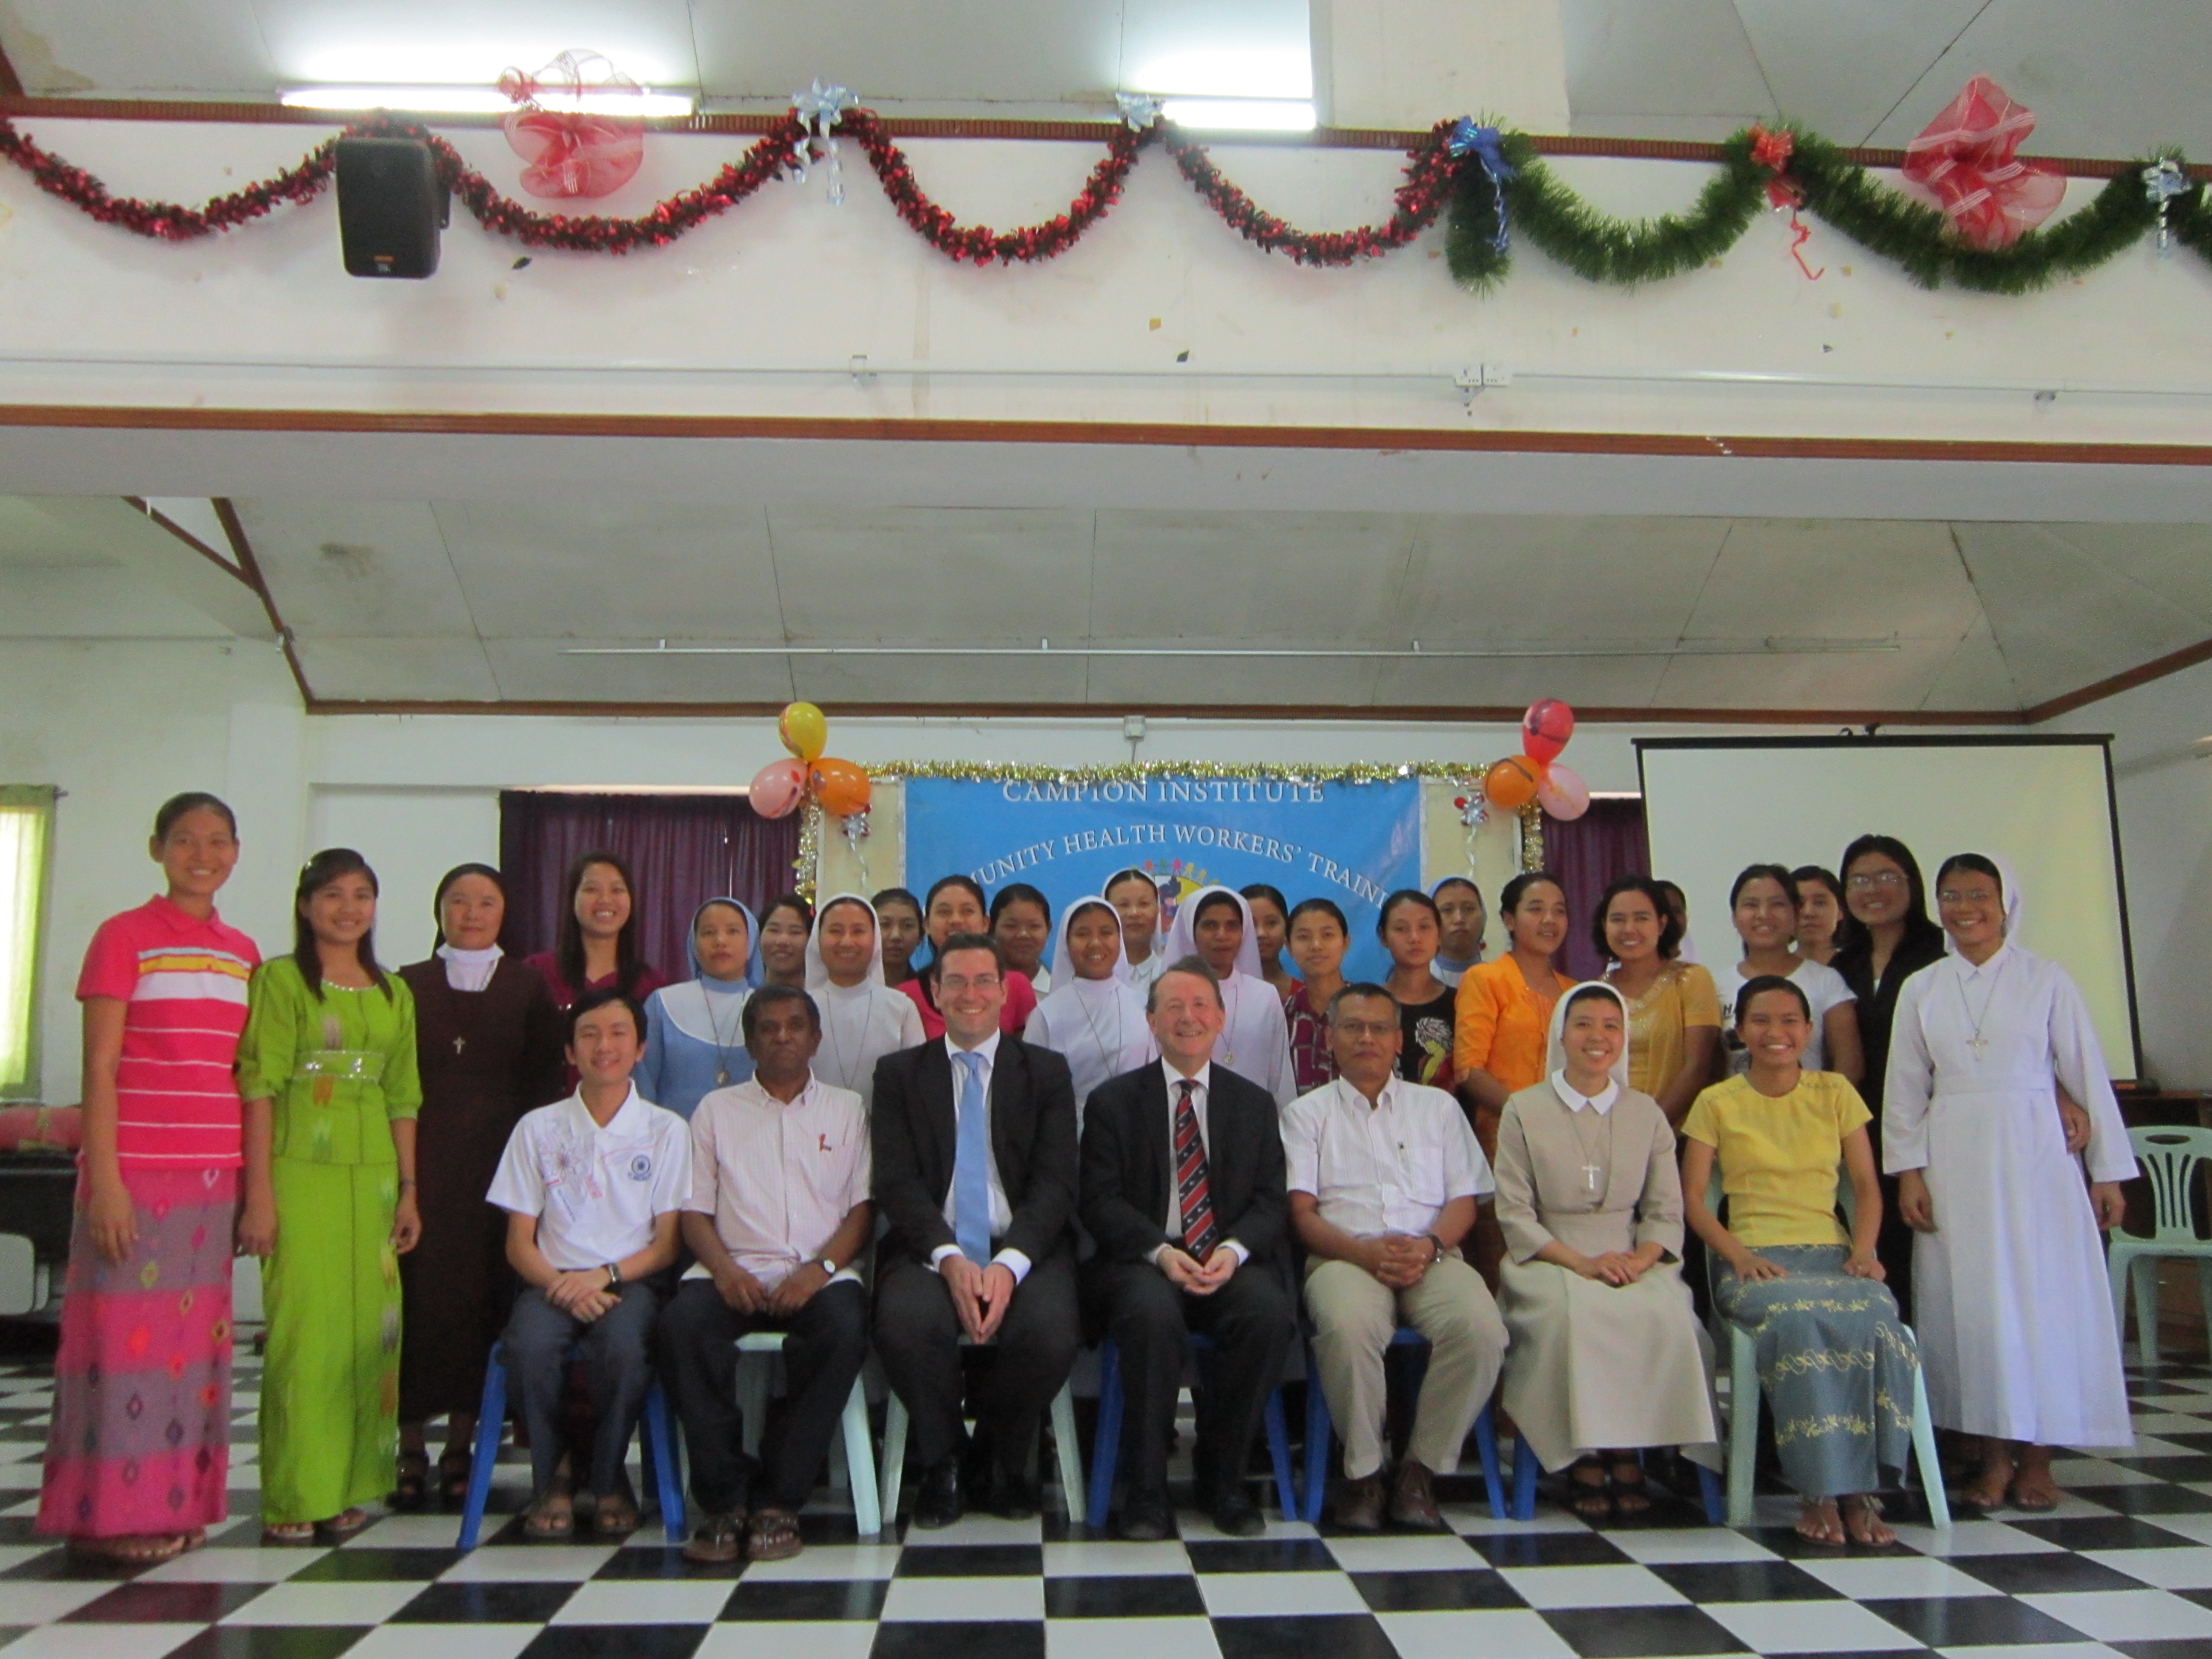 Award winners at Campion Institute, Rangoon.